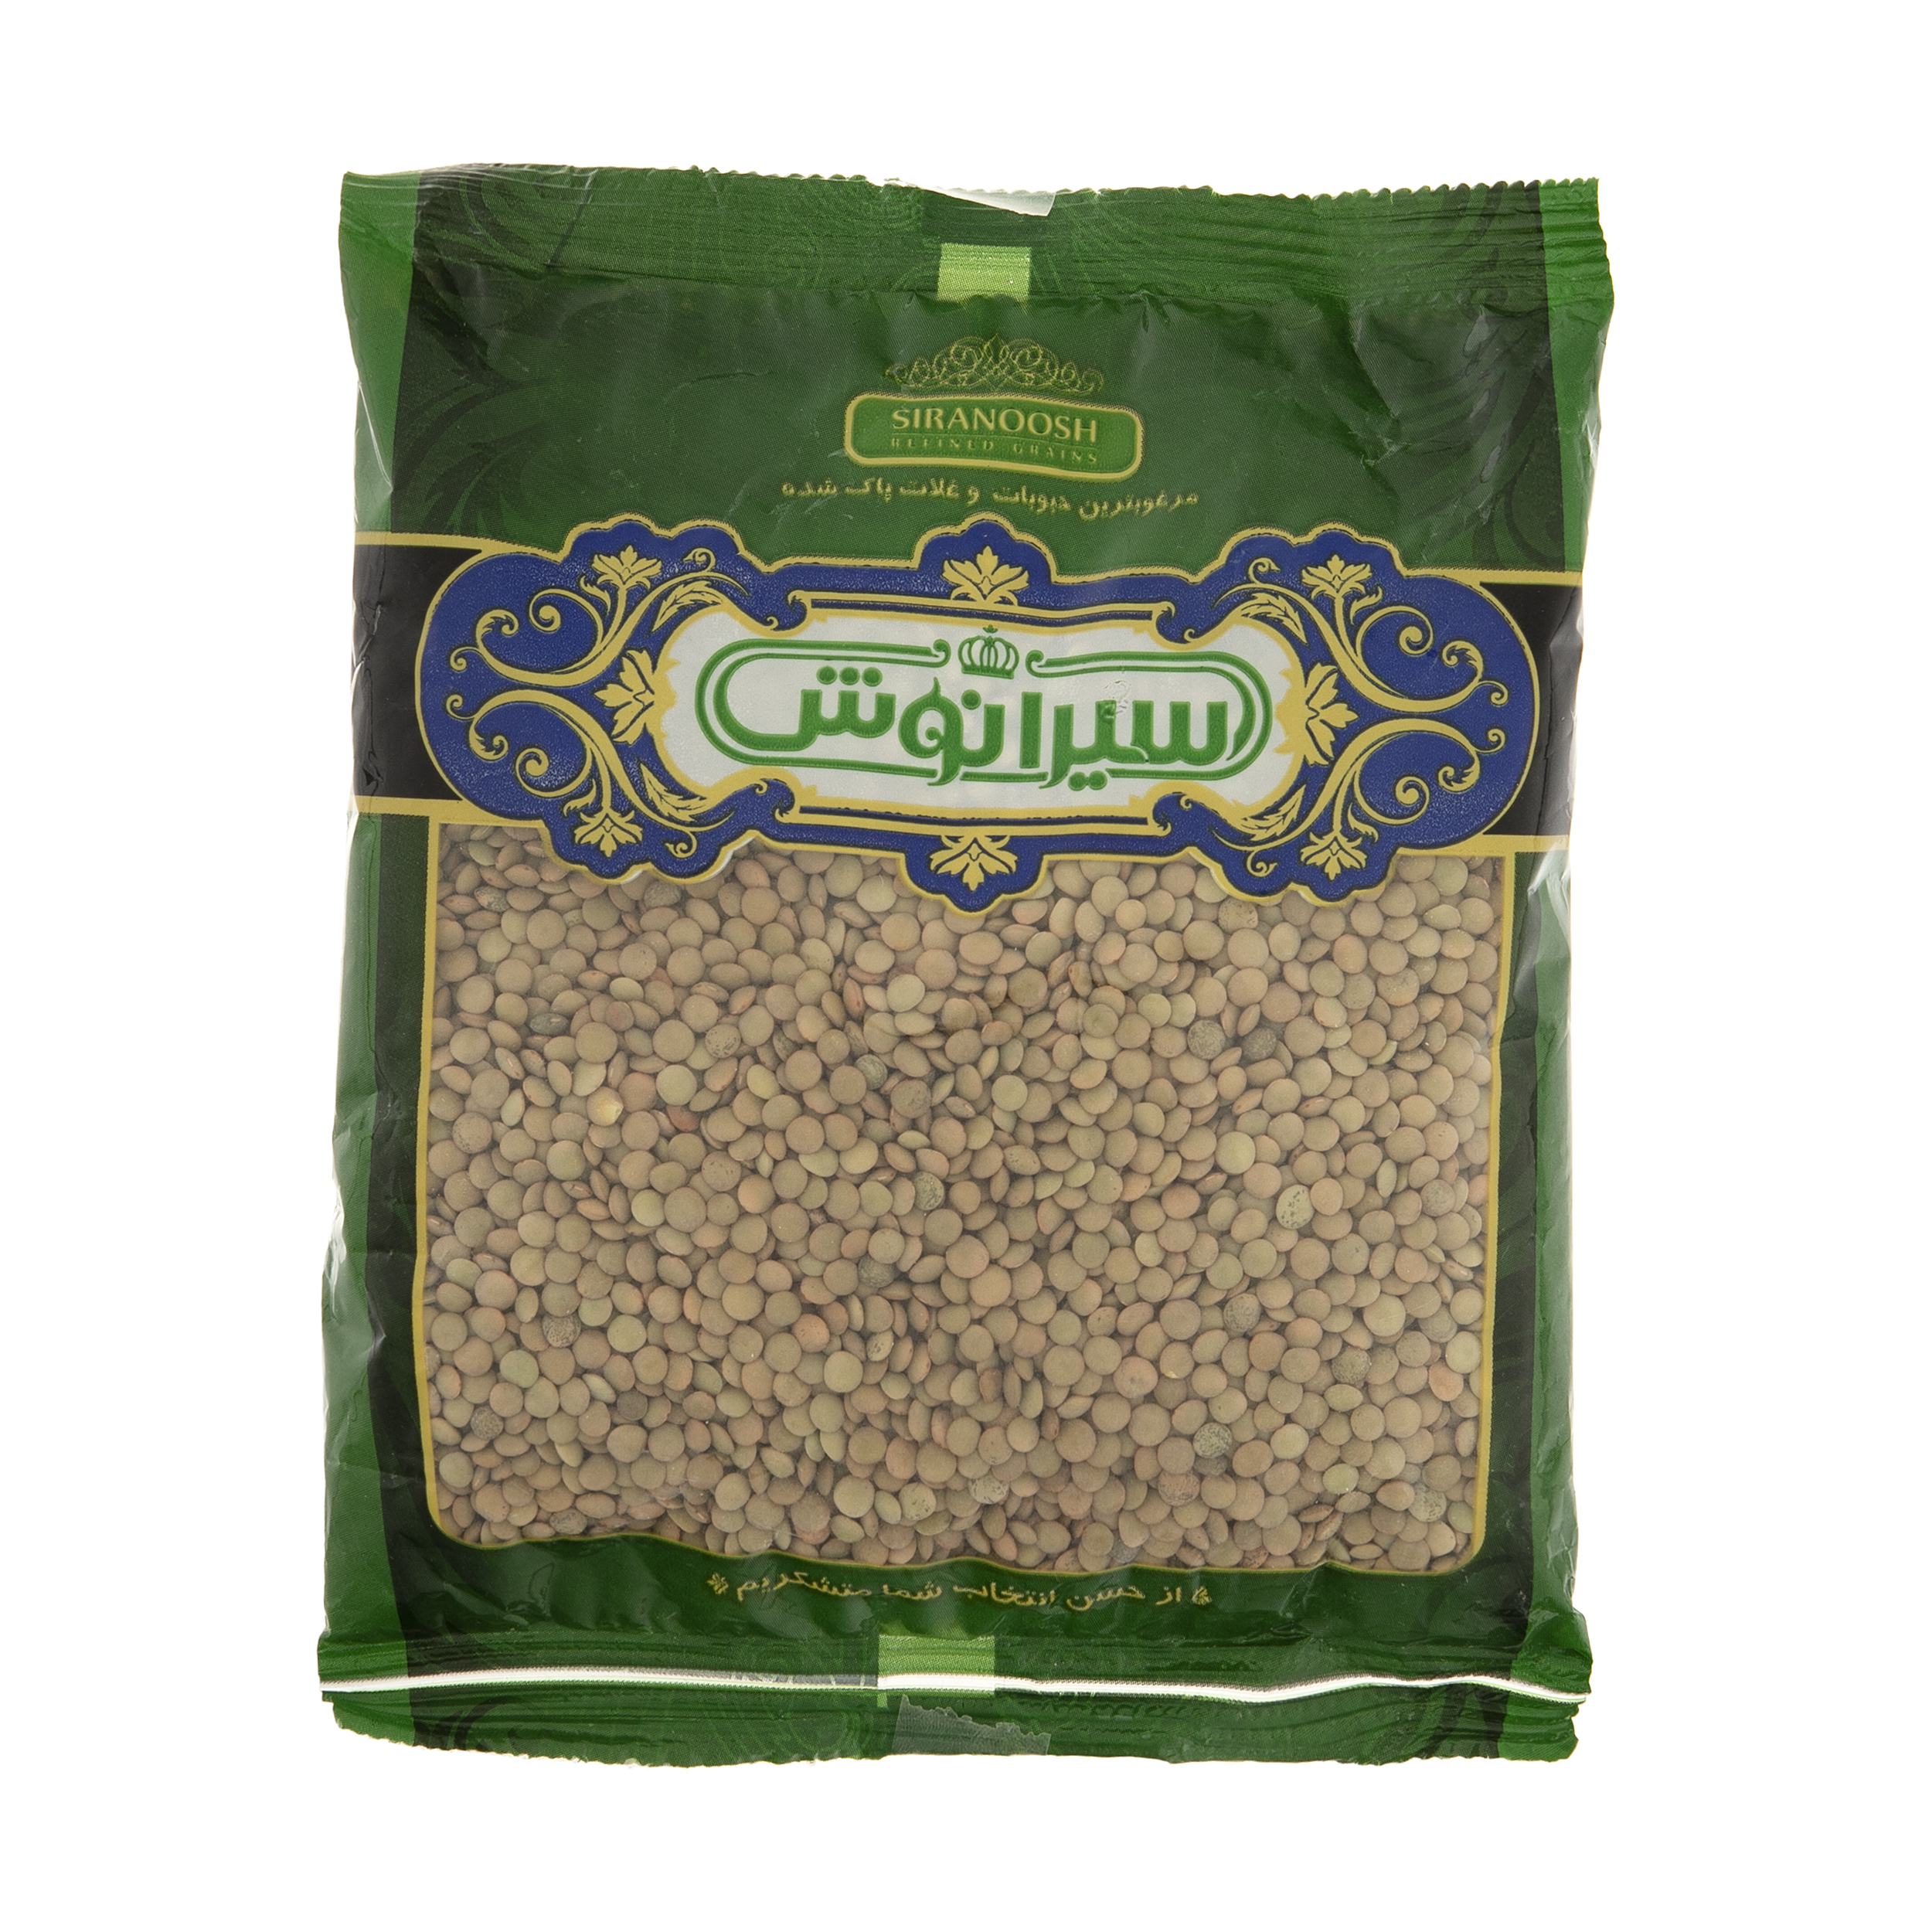 Siranoosh tiny lentils- 450 grams